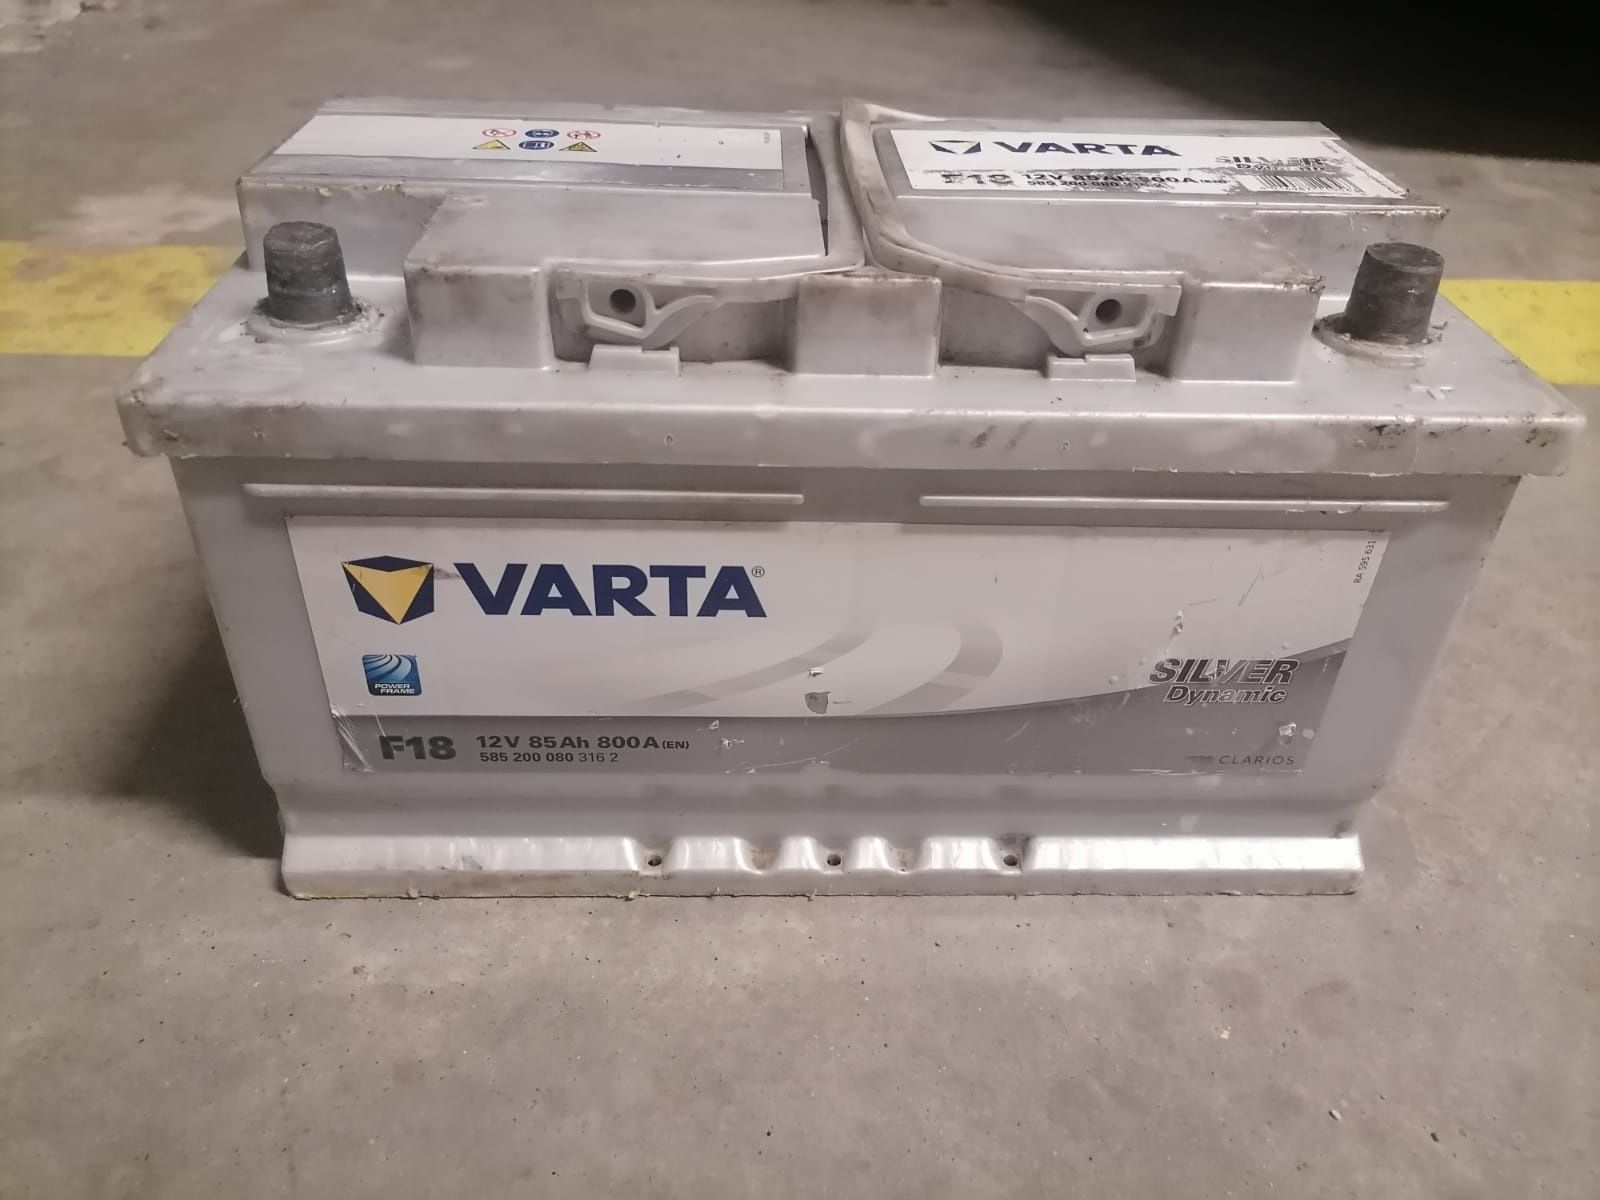 Vând baterie auto Varta Silver 85 amperi import Germania